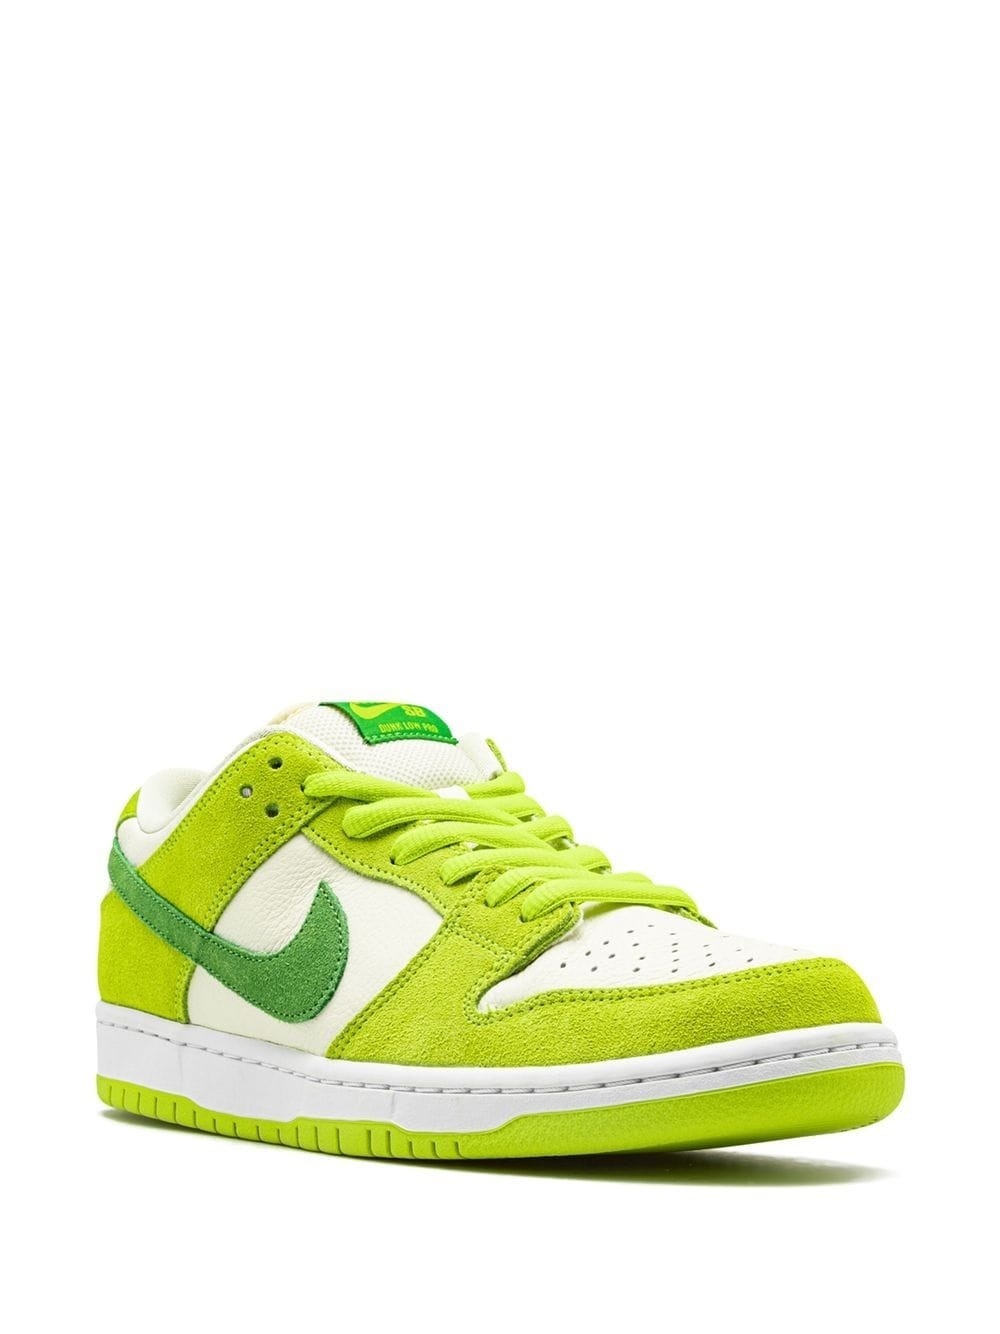 SB Dunk Low Pro "Green Apple" sneakers - 2